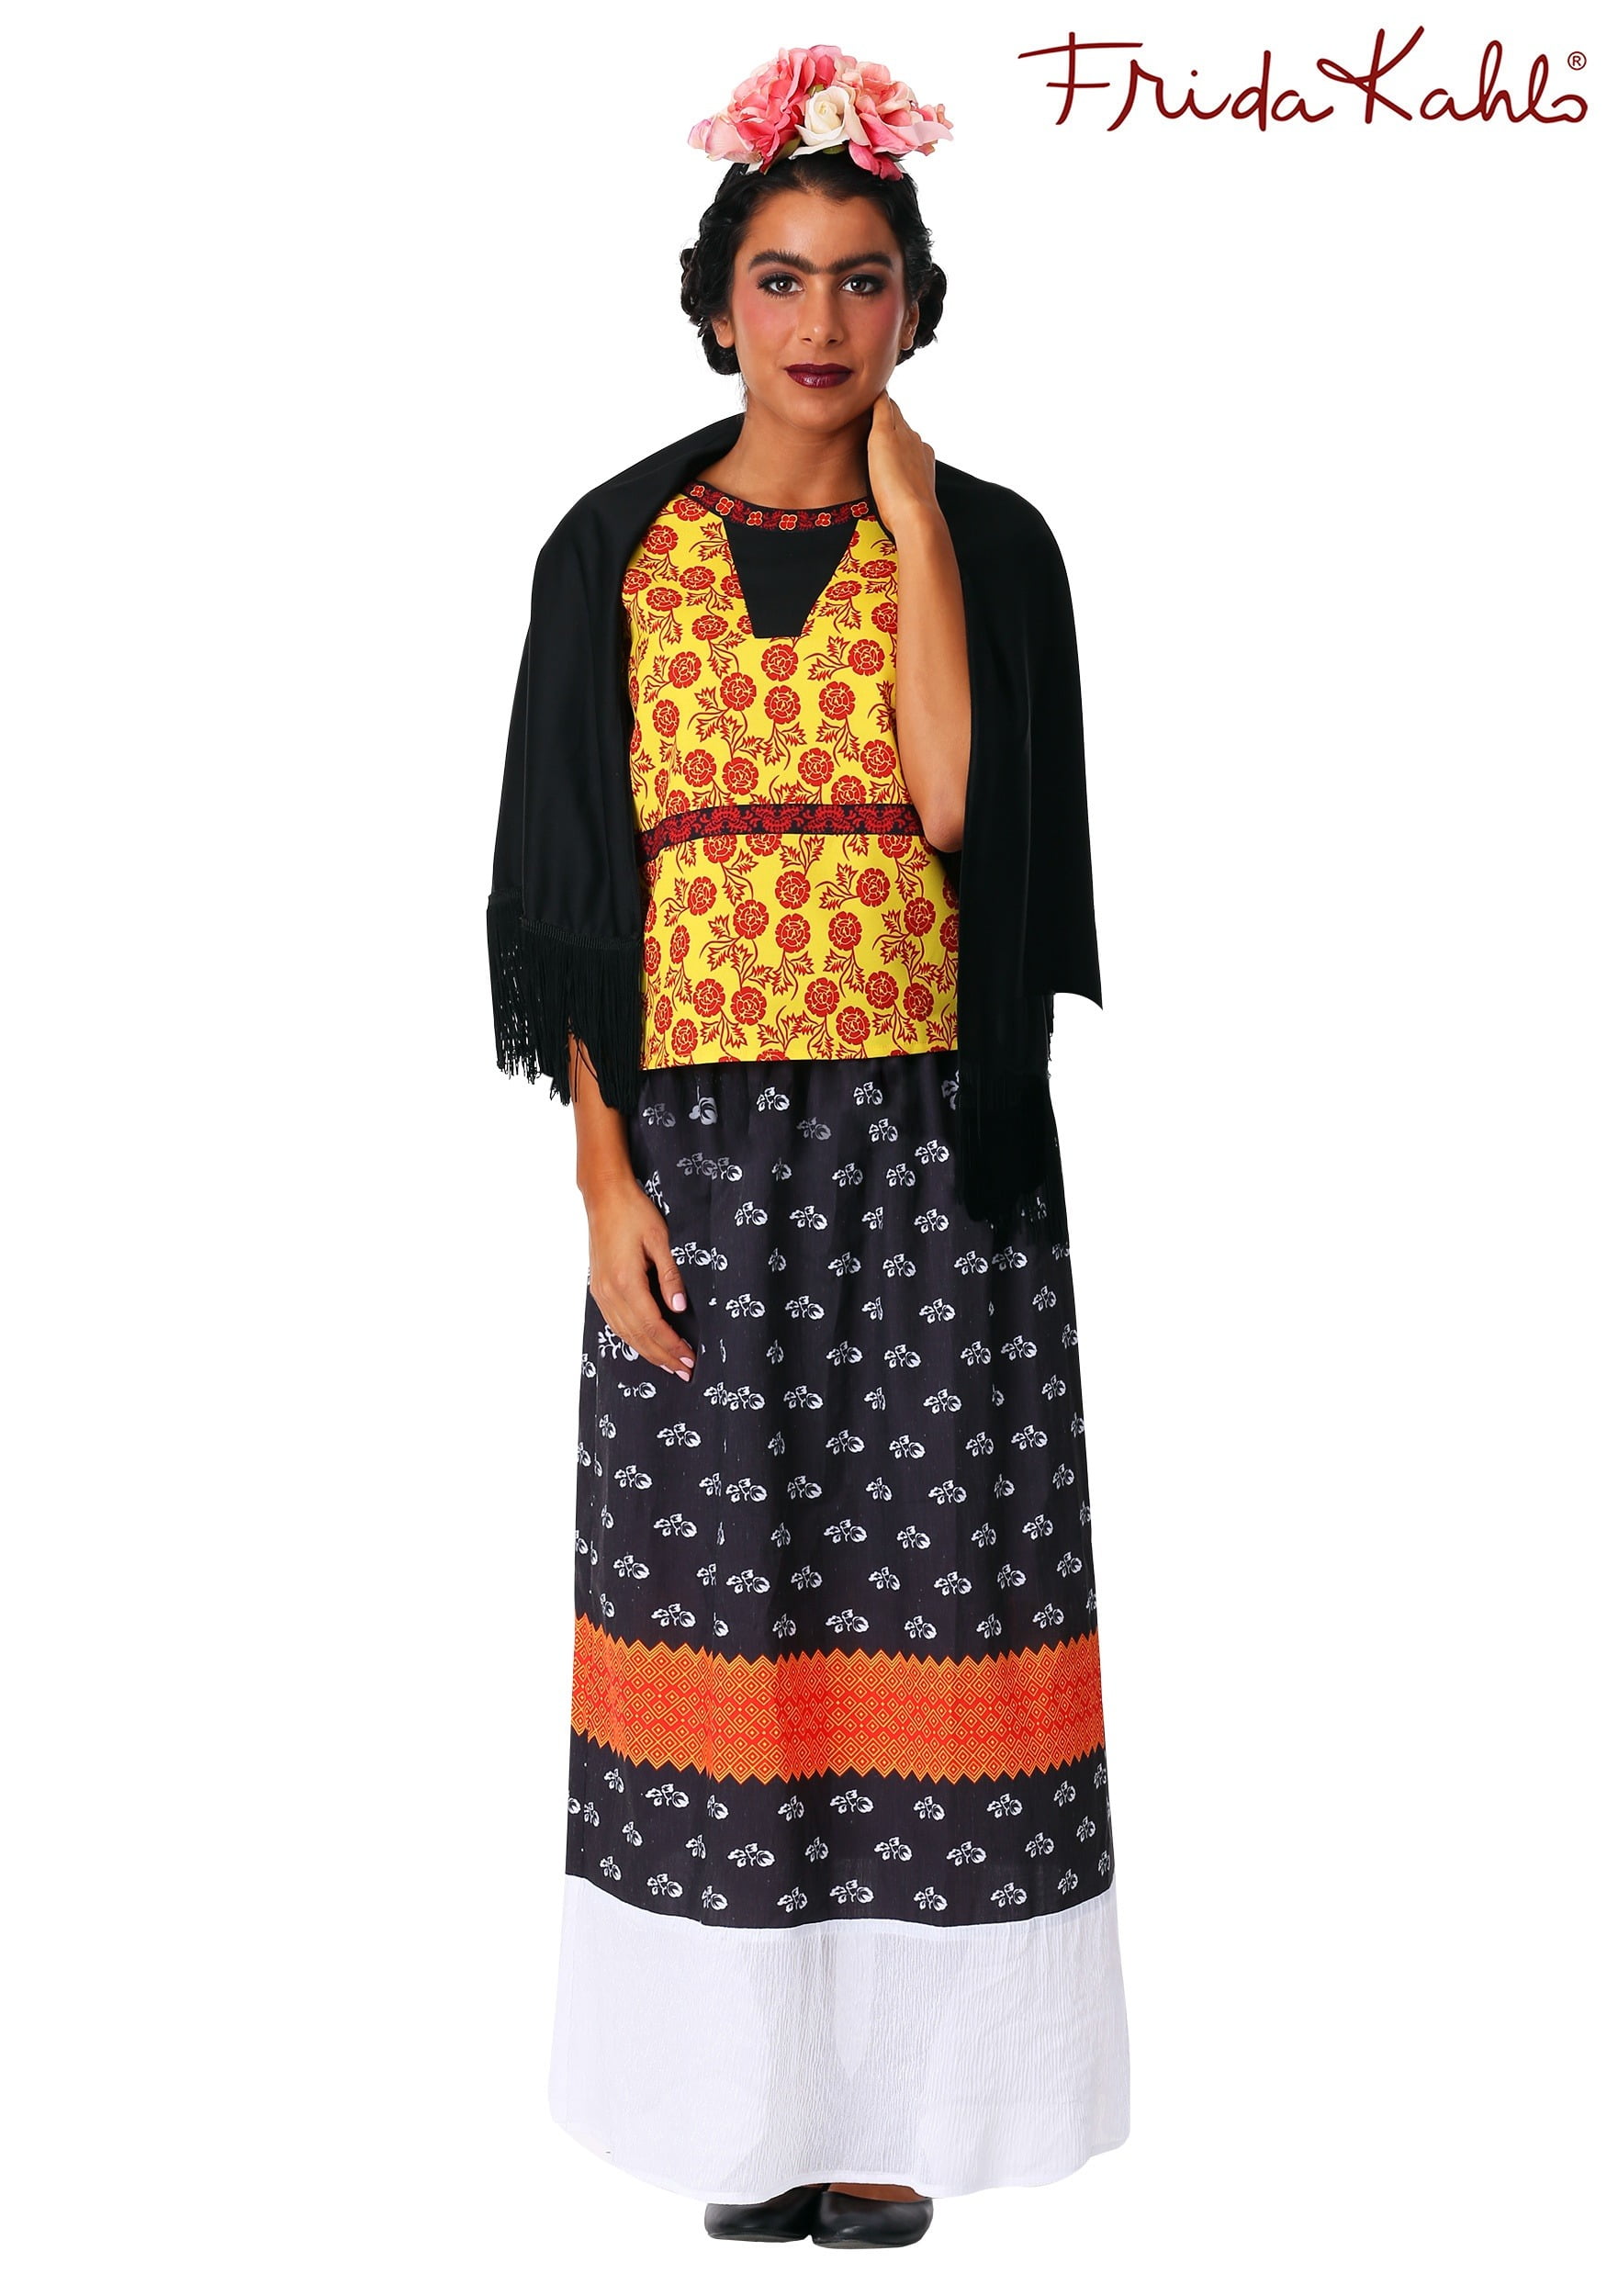 sne hvid kode Ungdom Women's Plus Size Frida Kahlo Costume - Walmart.com